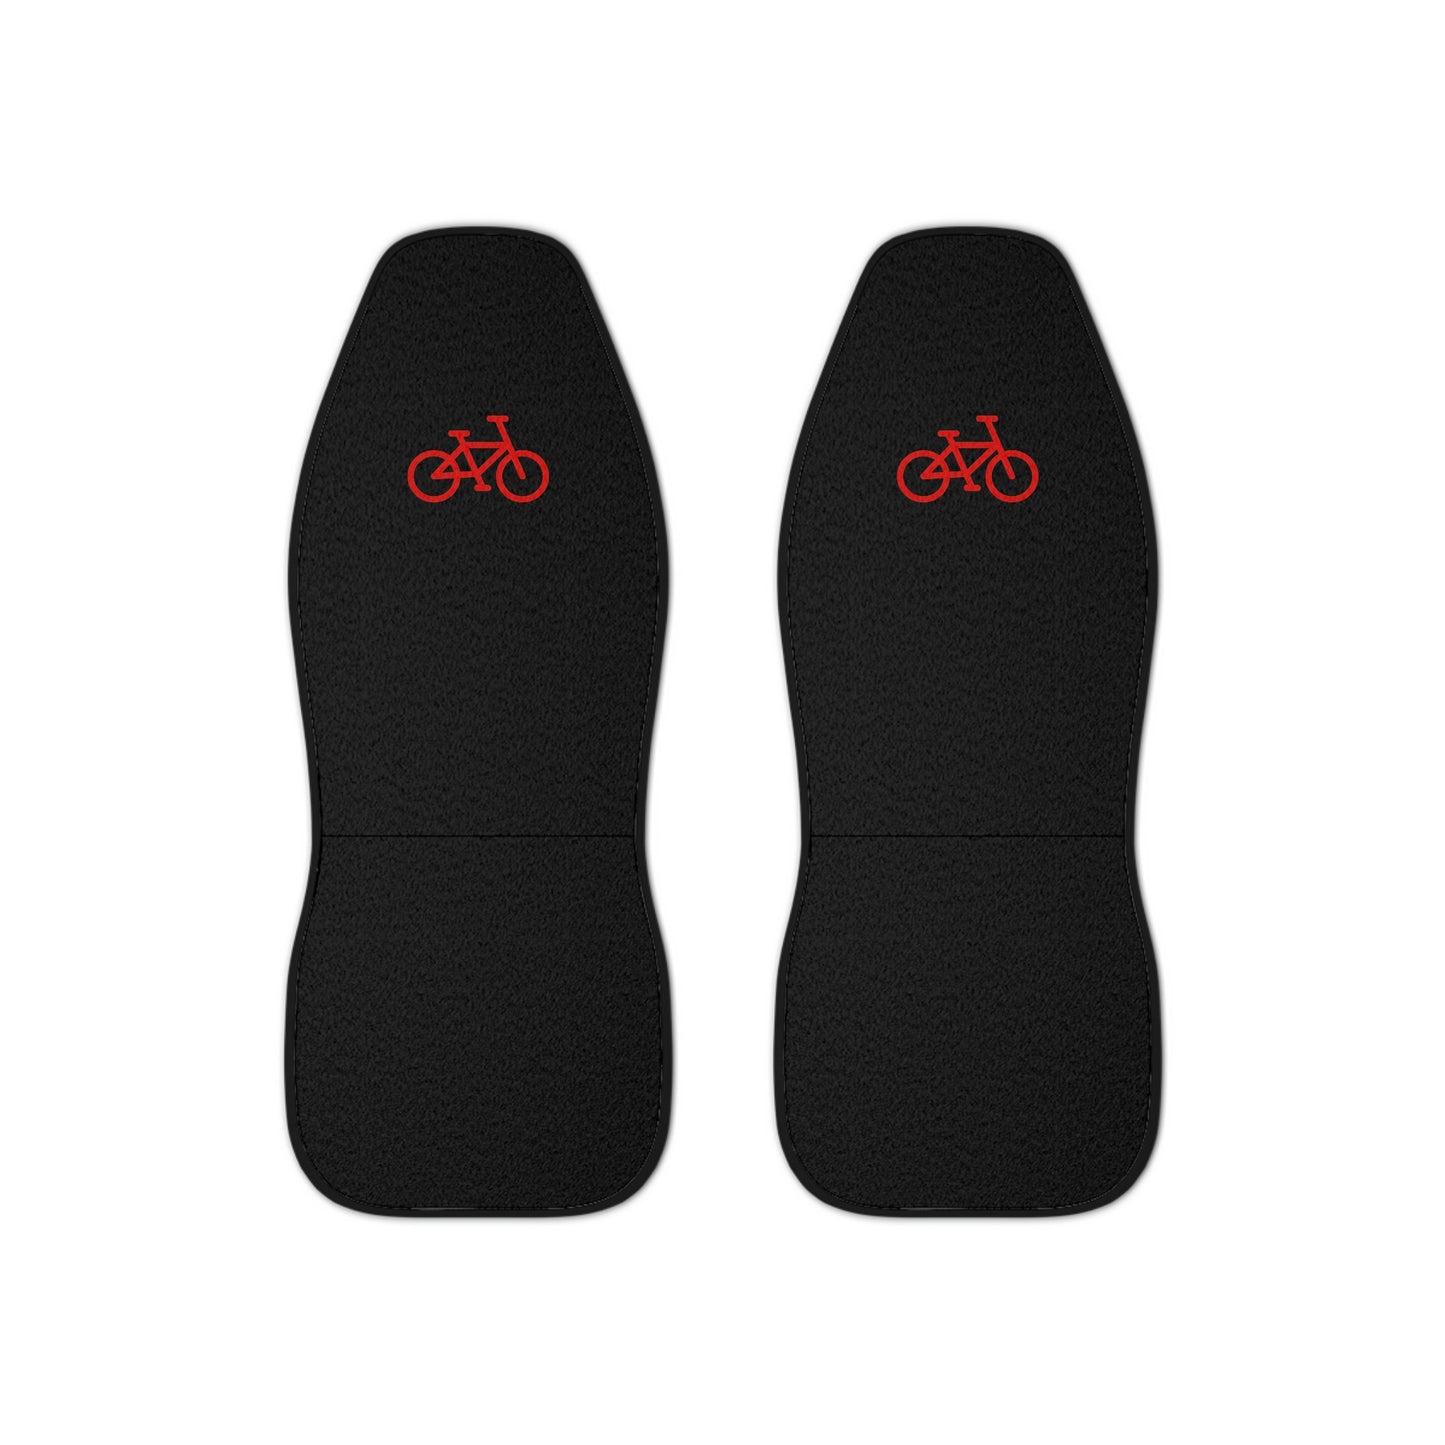 Black Car Seat Covers - Red Bike Print